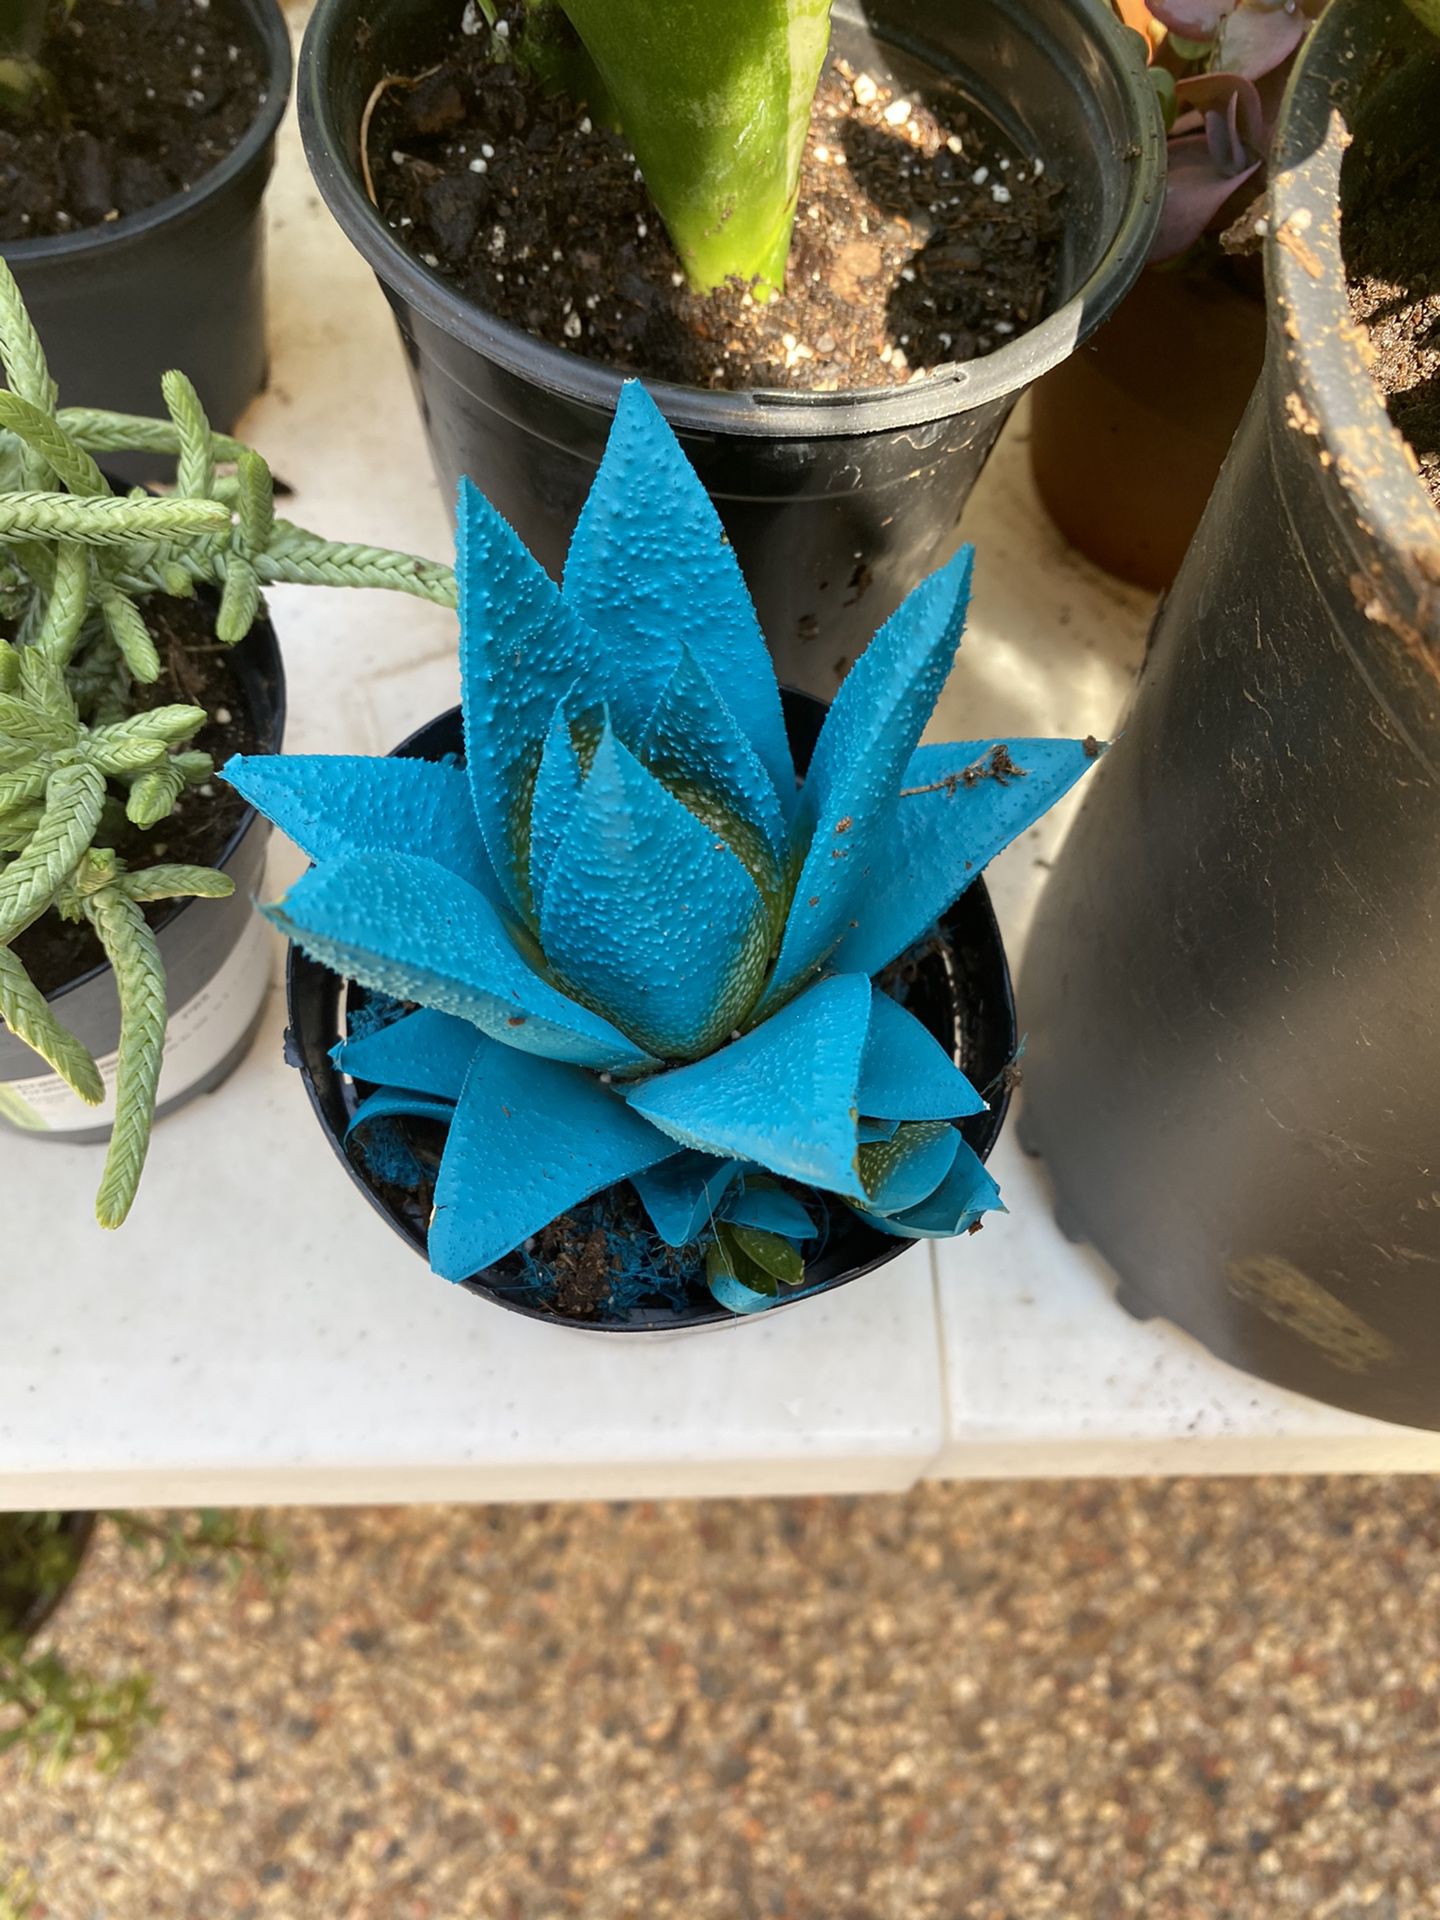 Strikingly blue succulent! Kosmik Kaktus